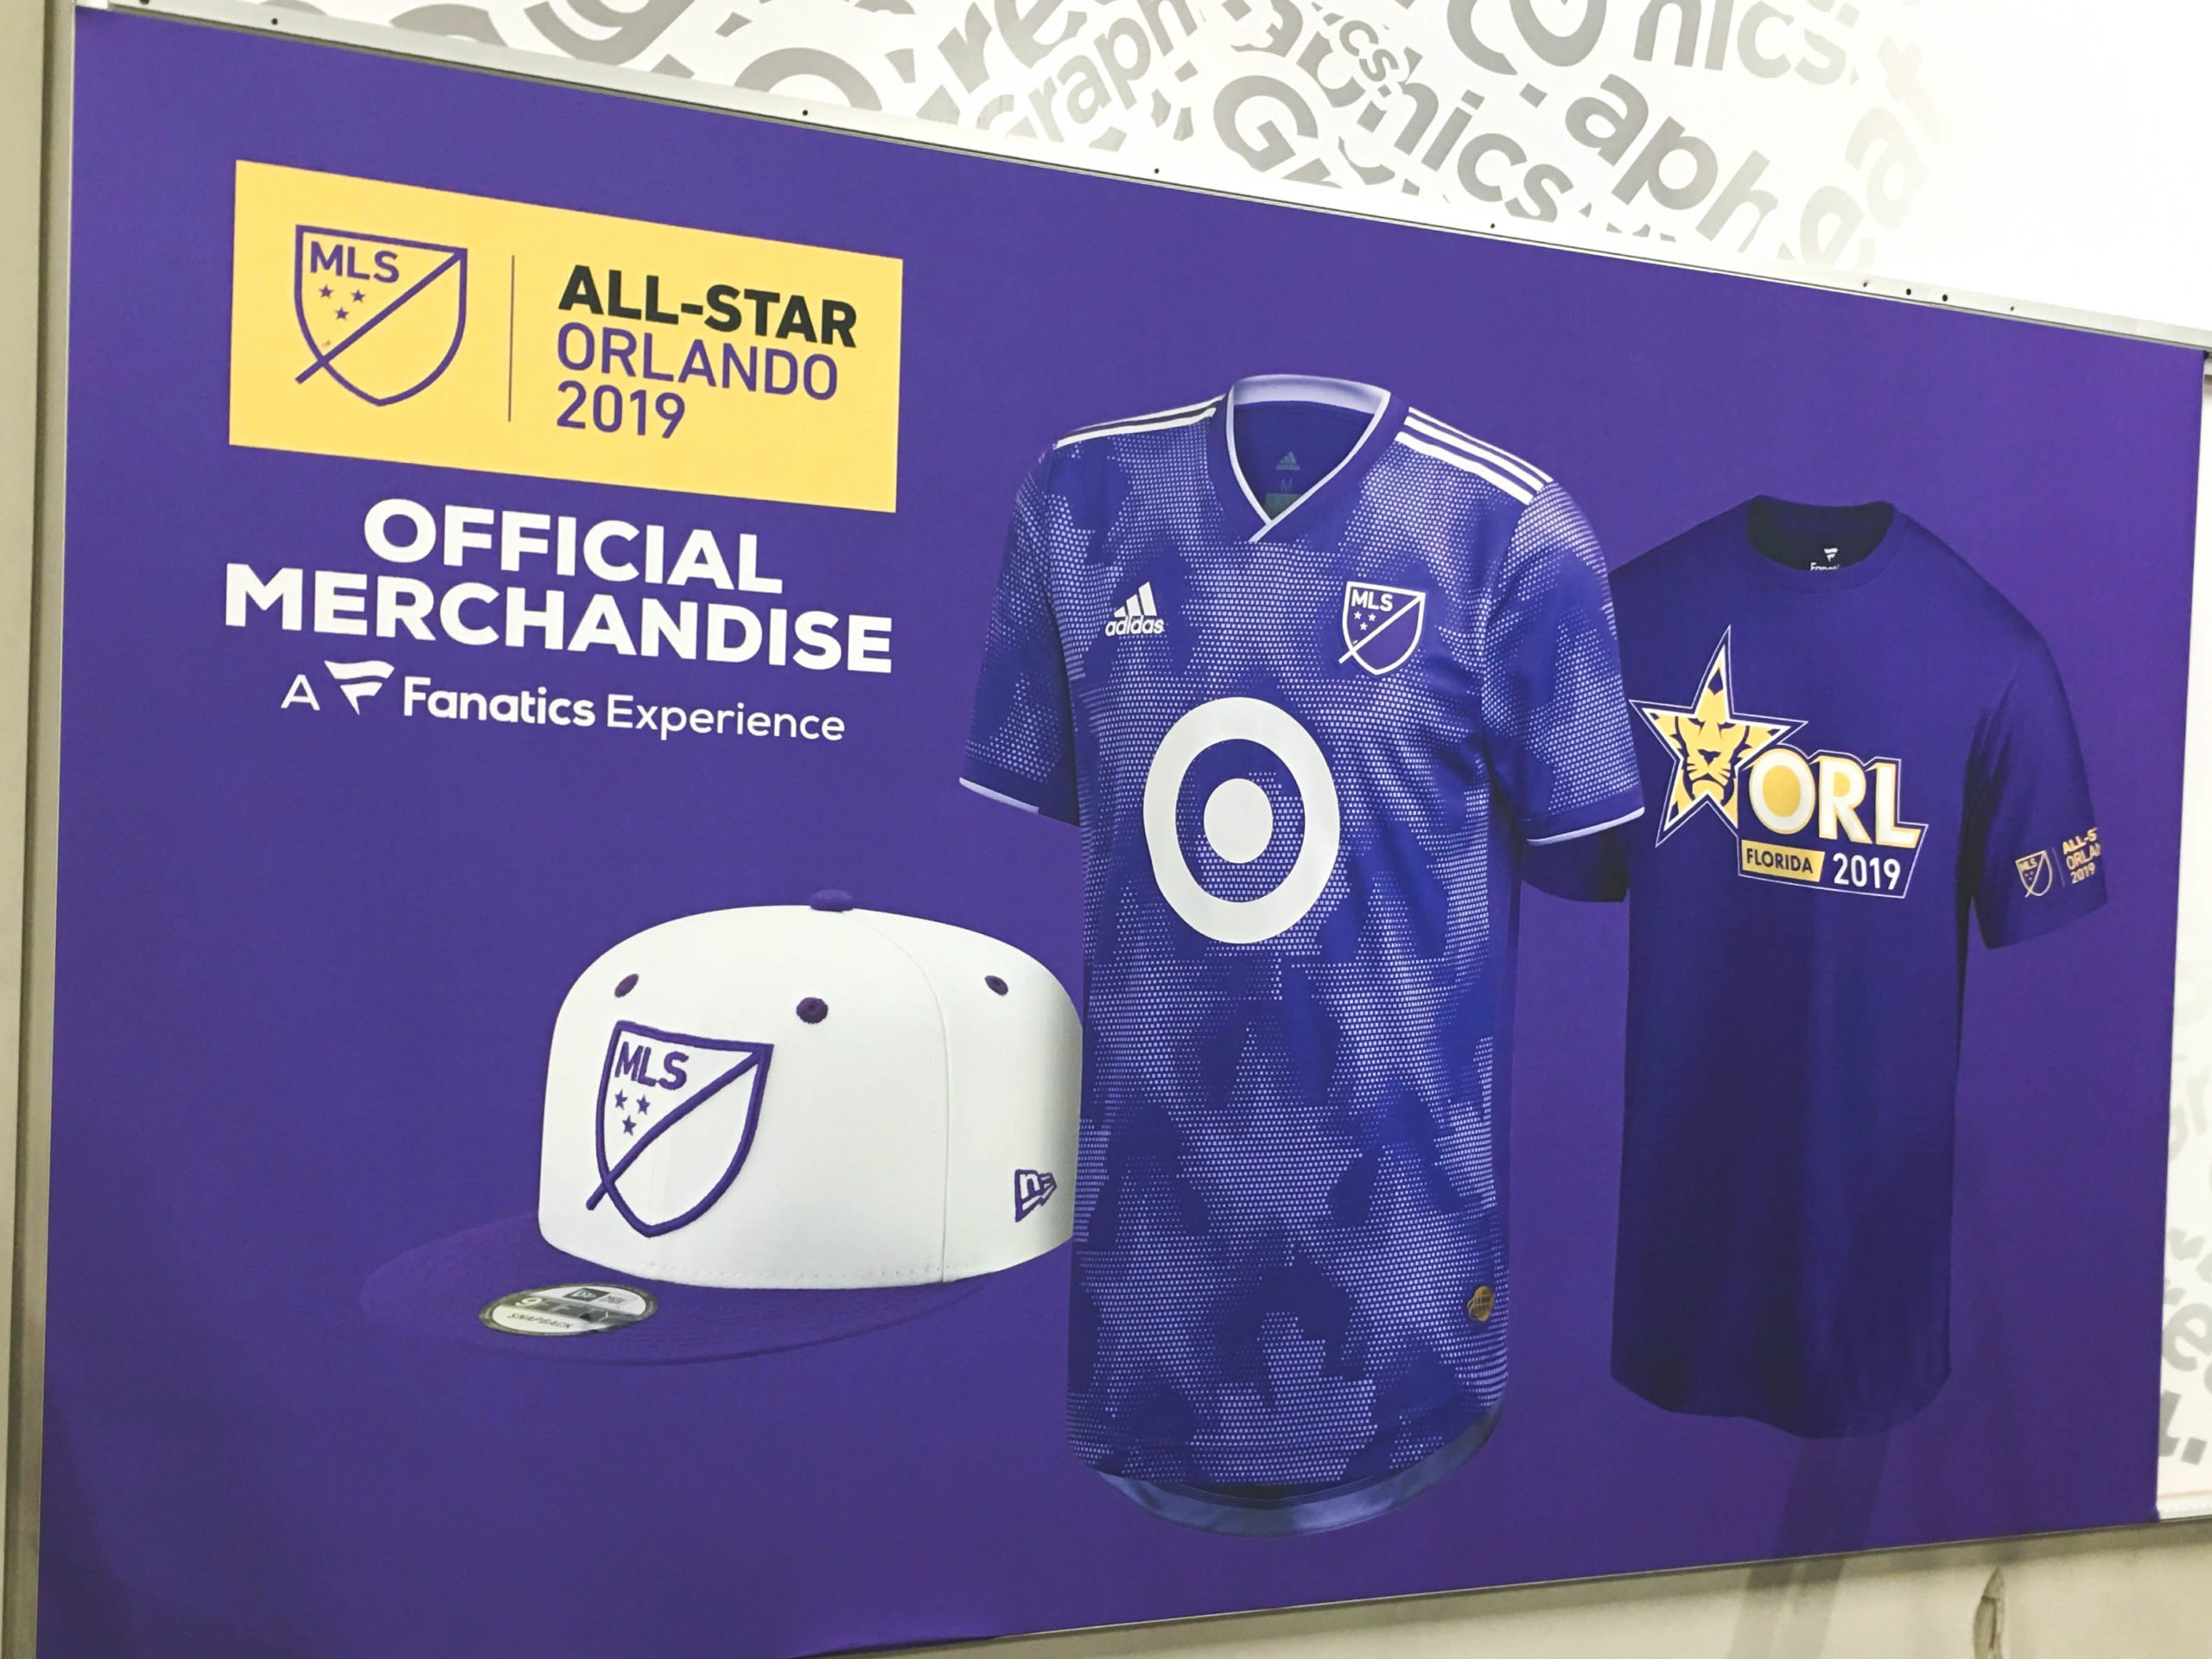 MLS official merchandise sign